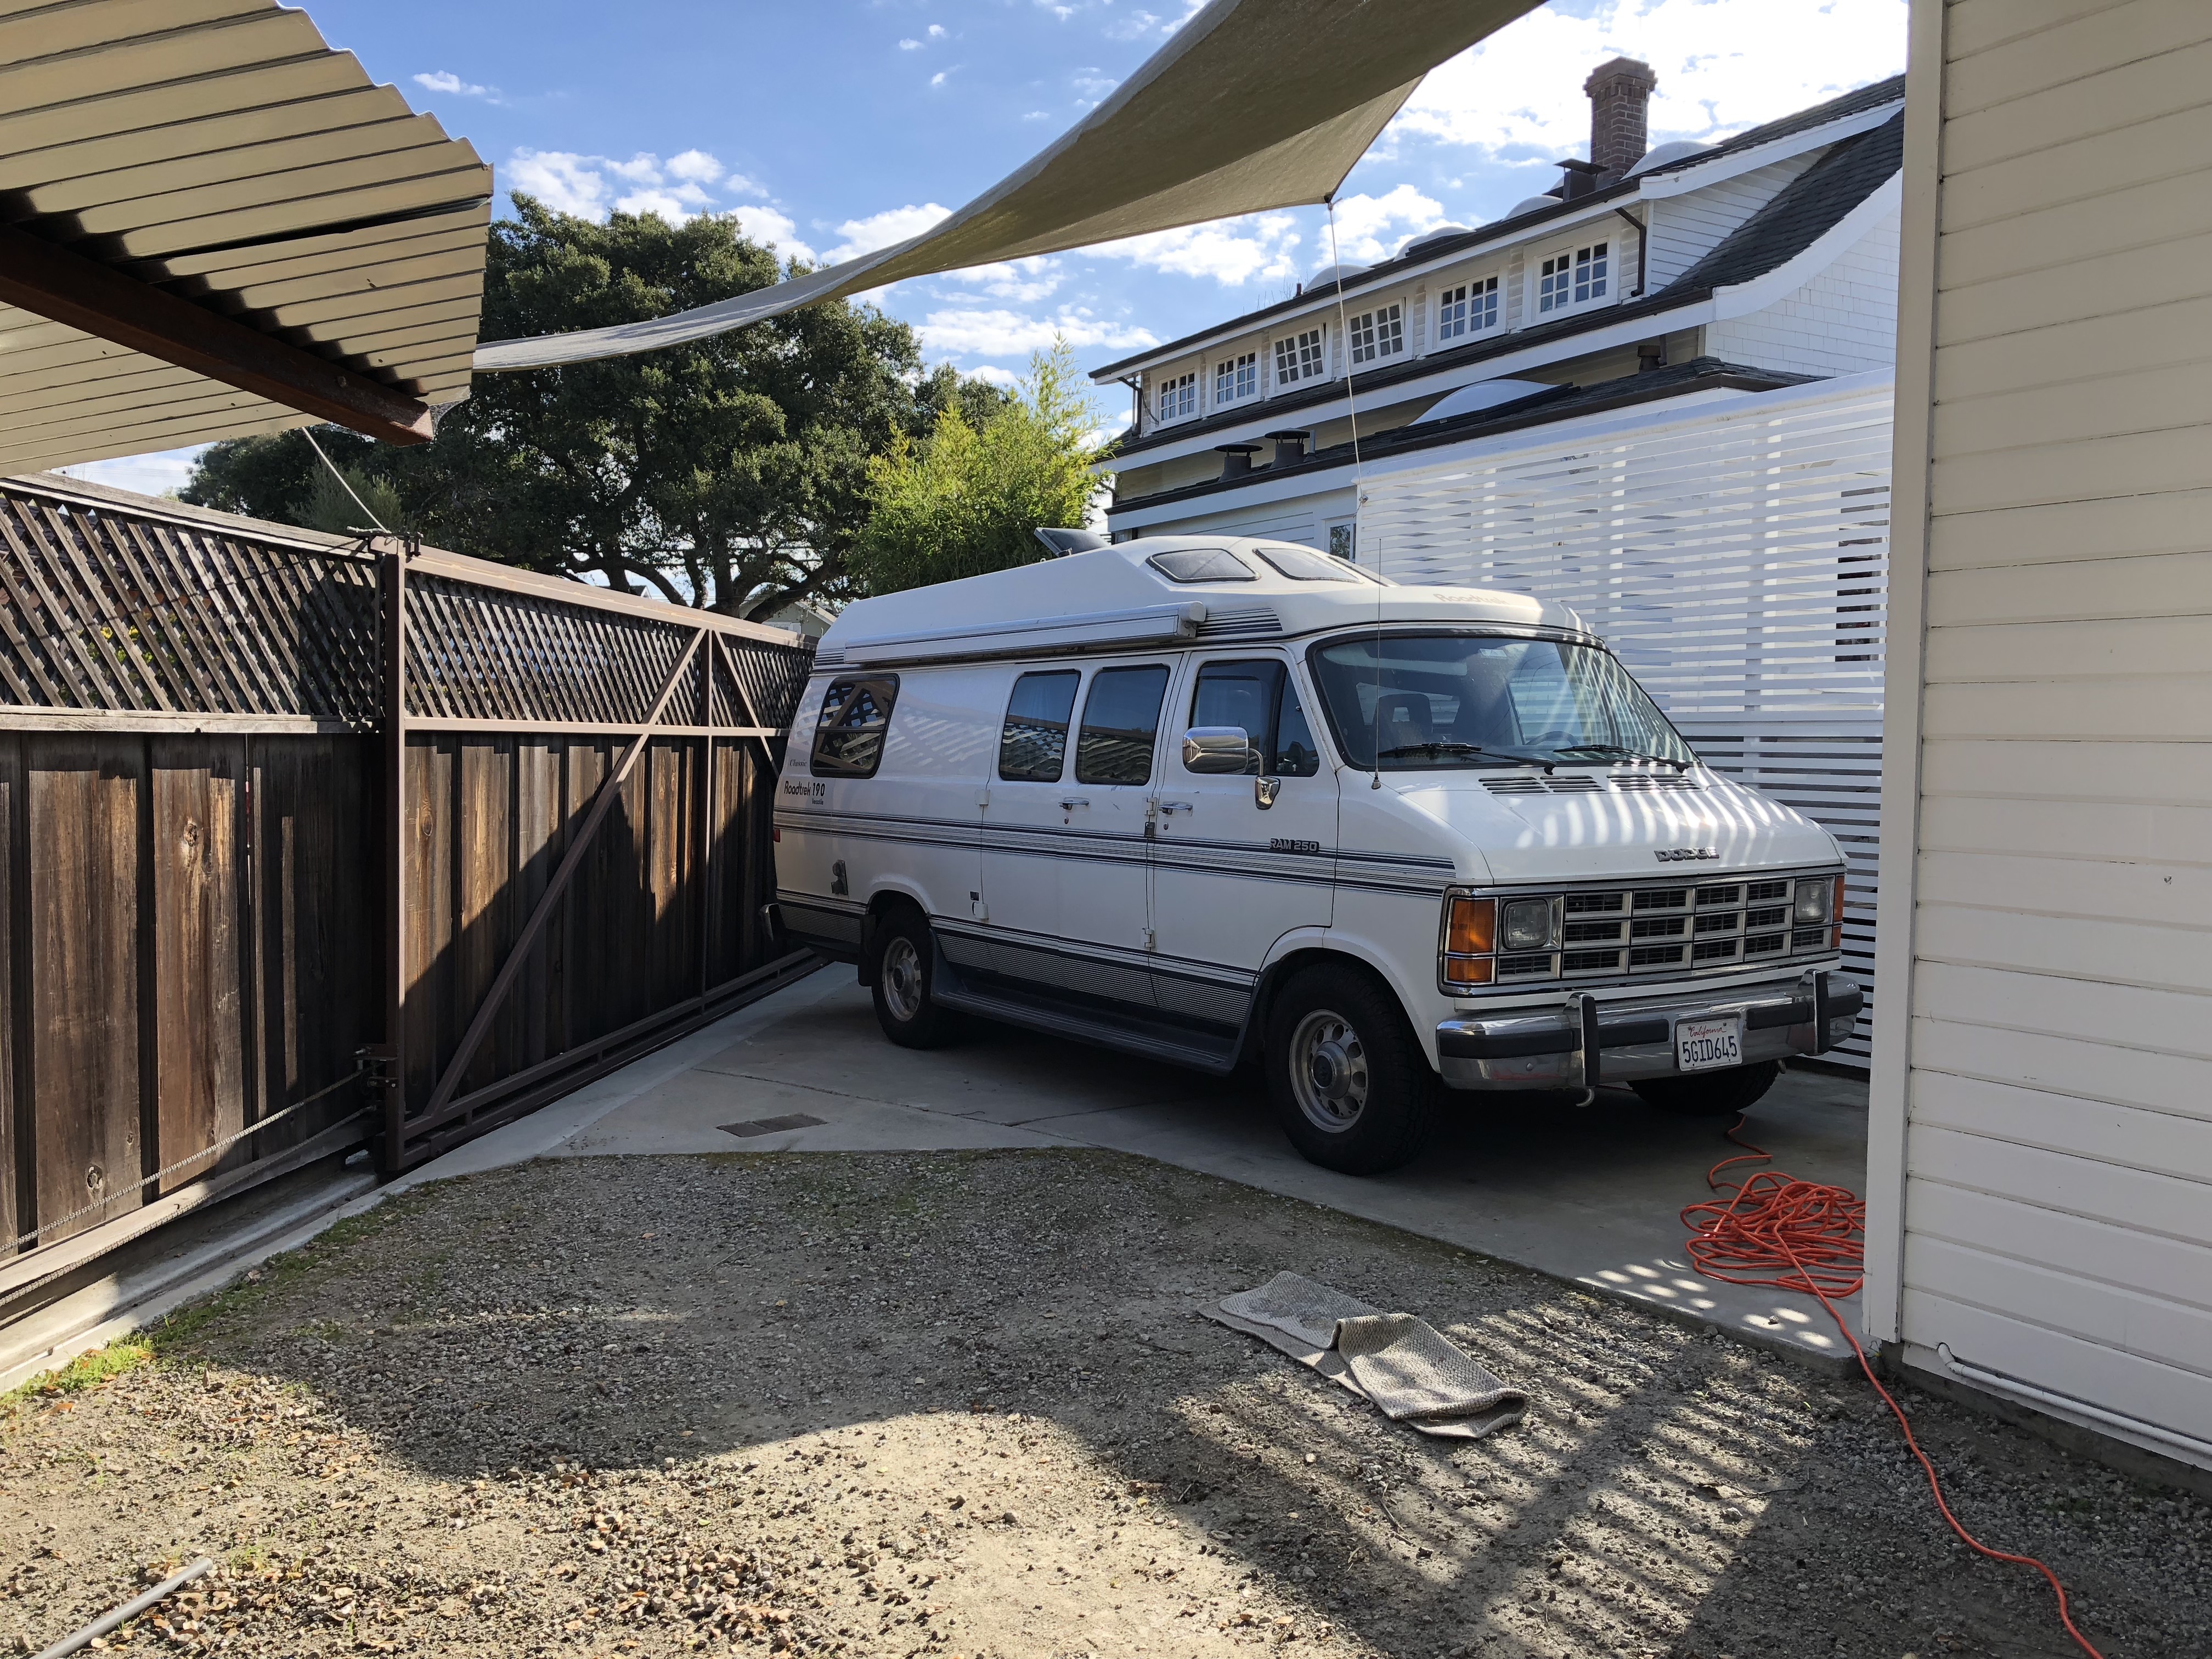 The van in a driveway in Santa Cruz